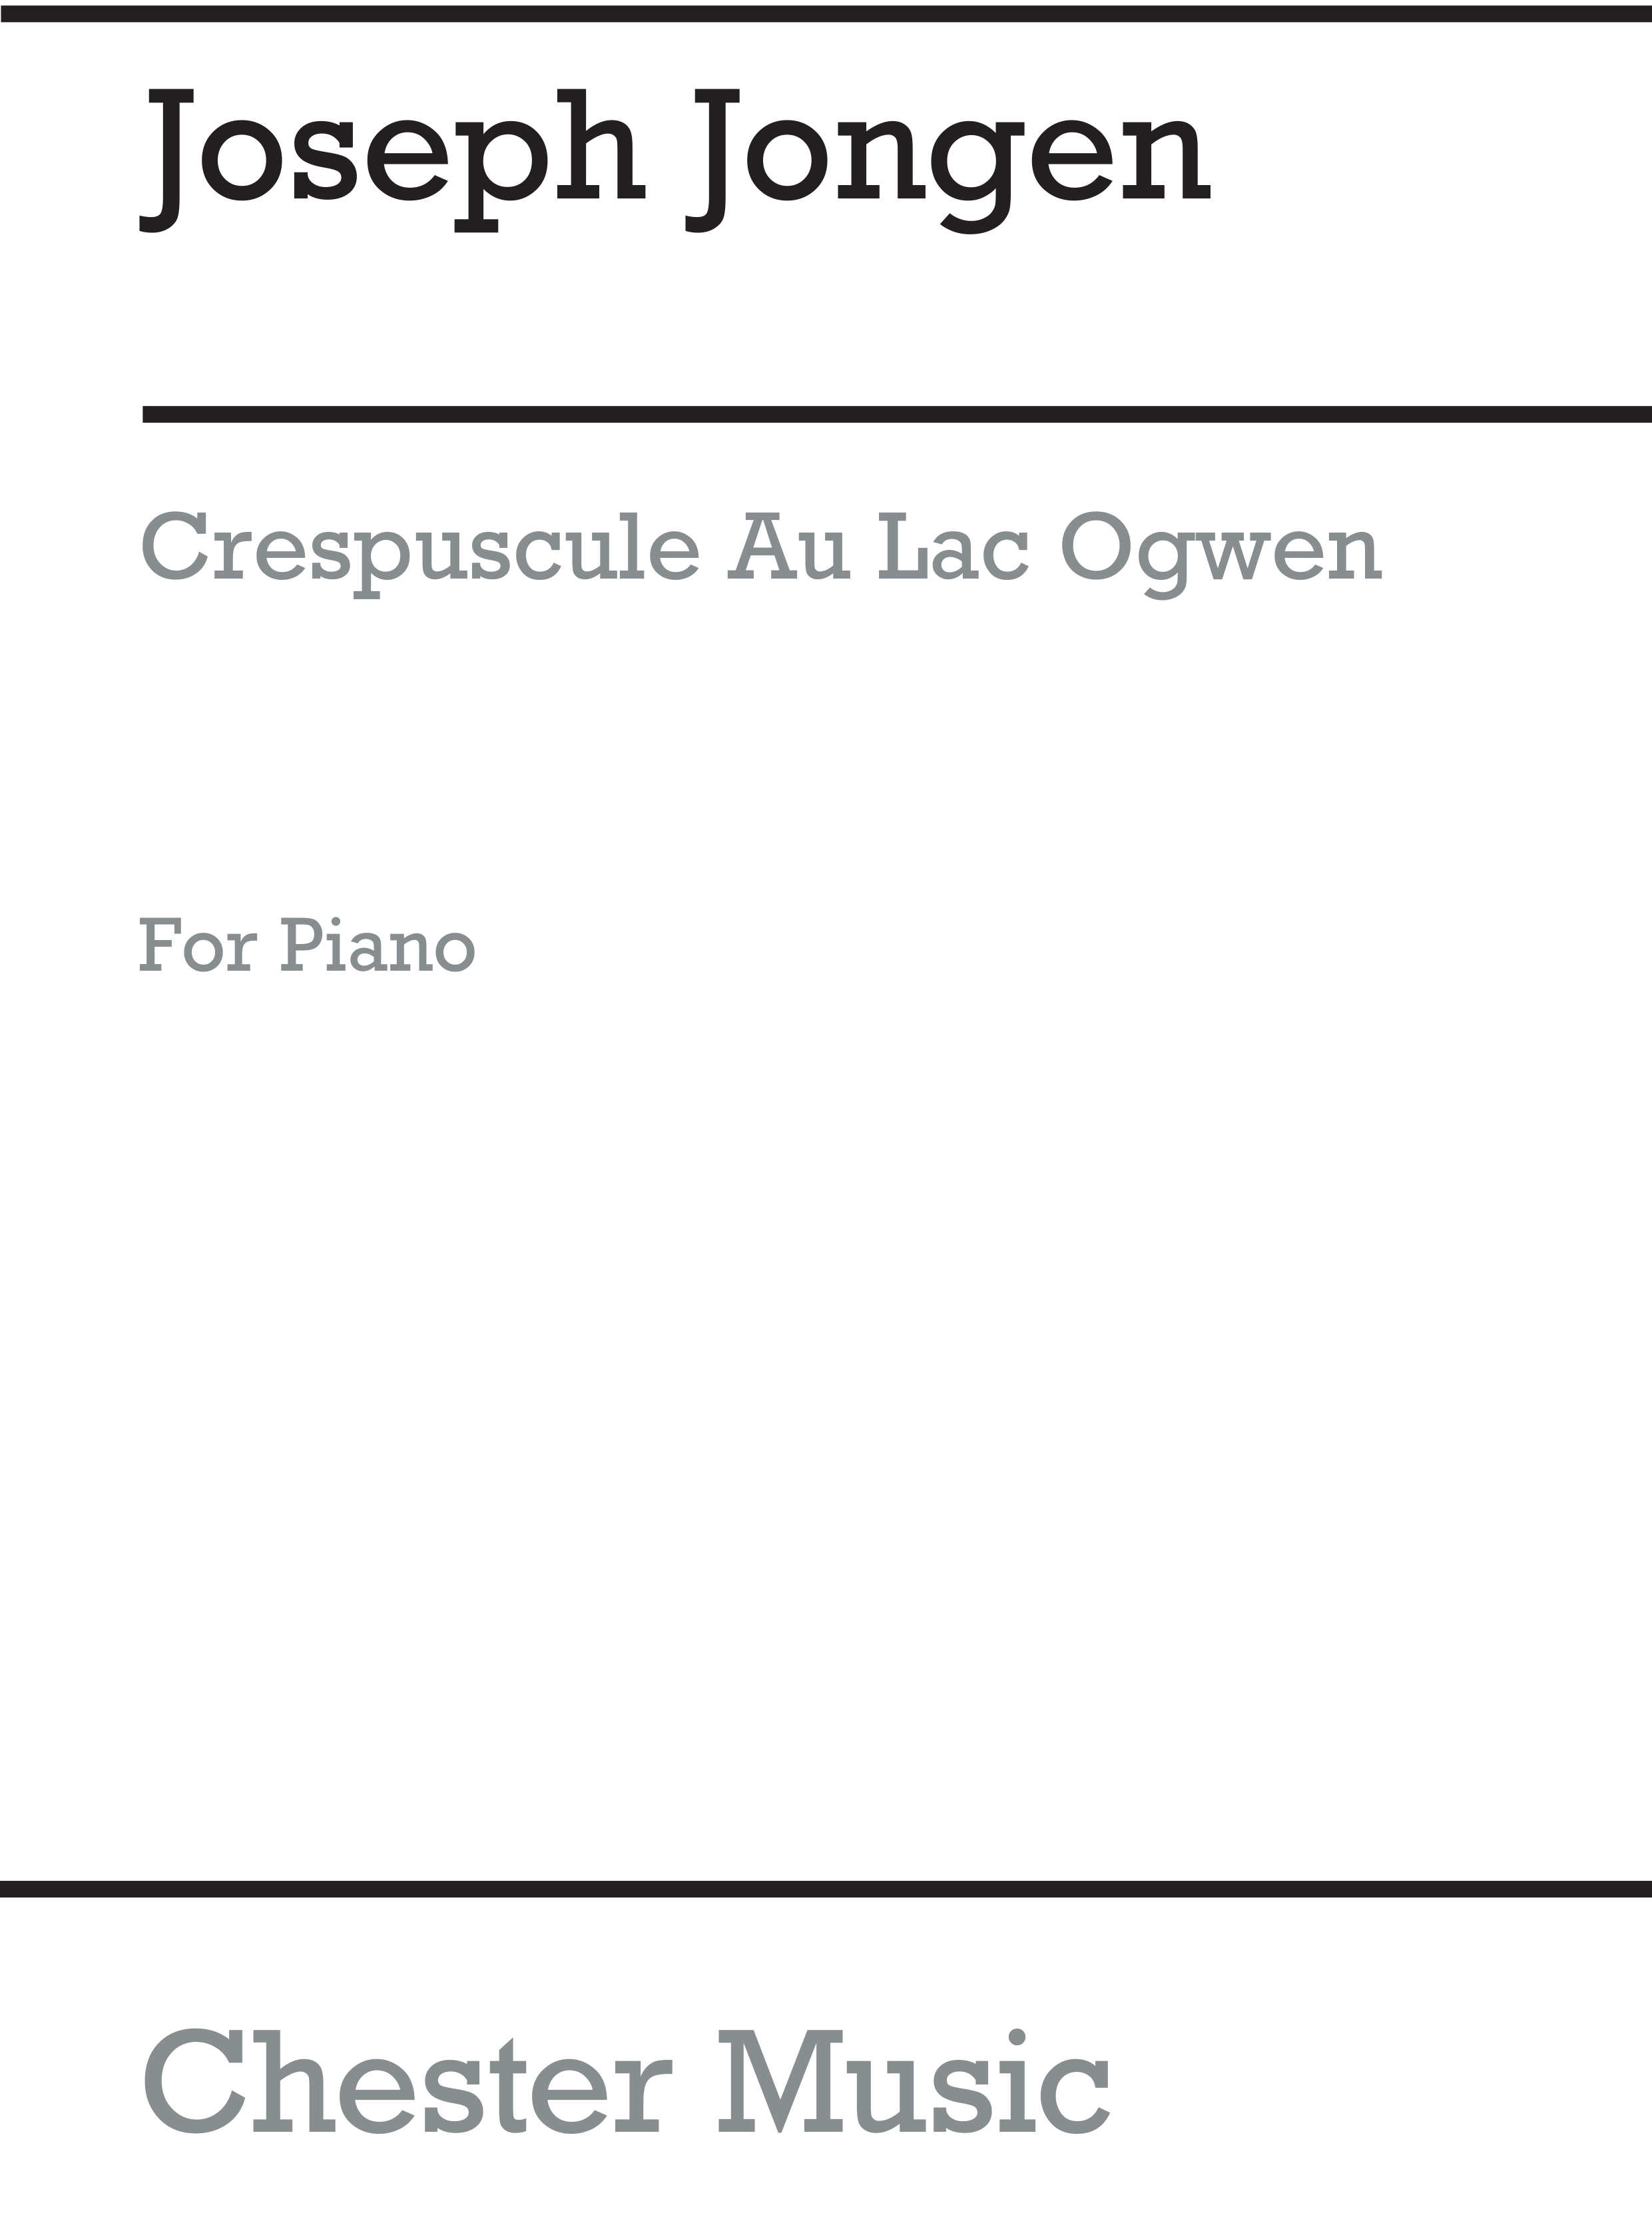 Joseph Jongen: Crepuscule Au Lac Ogwen Impression (Piano): Piano: Instrumental